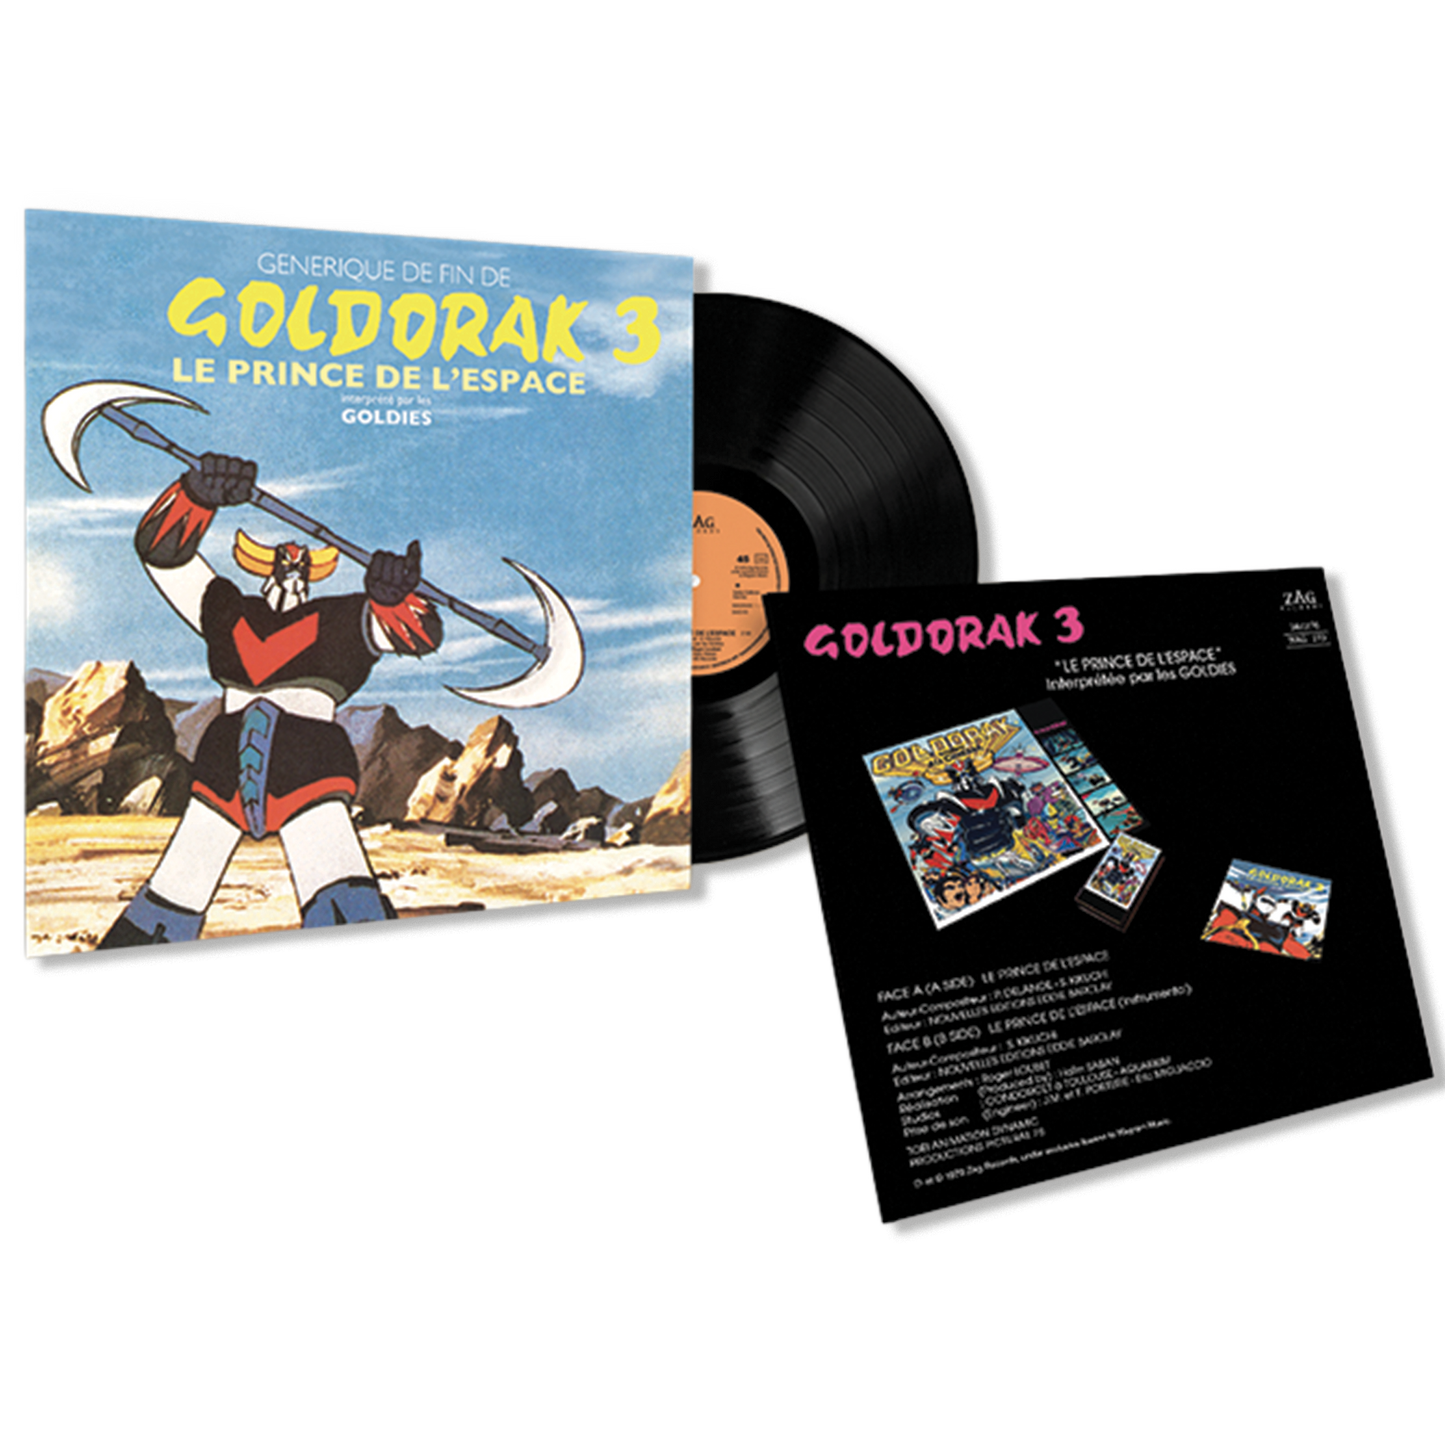 Catsuka Shopping - Goldorak - The Box Set II (Coffret Vinyl FR)